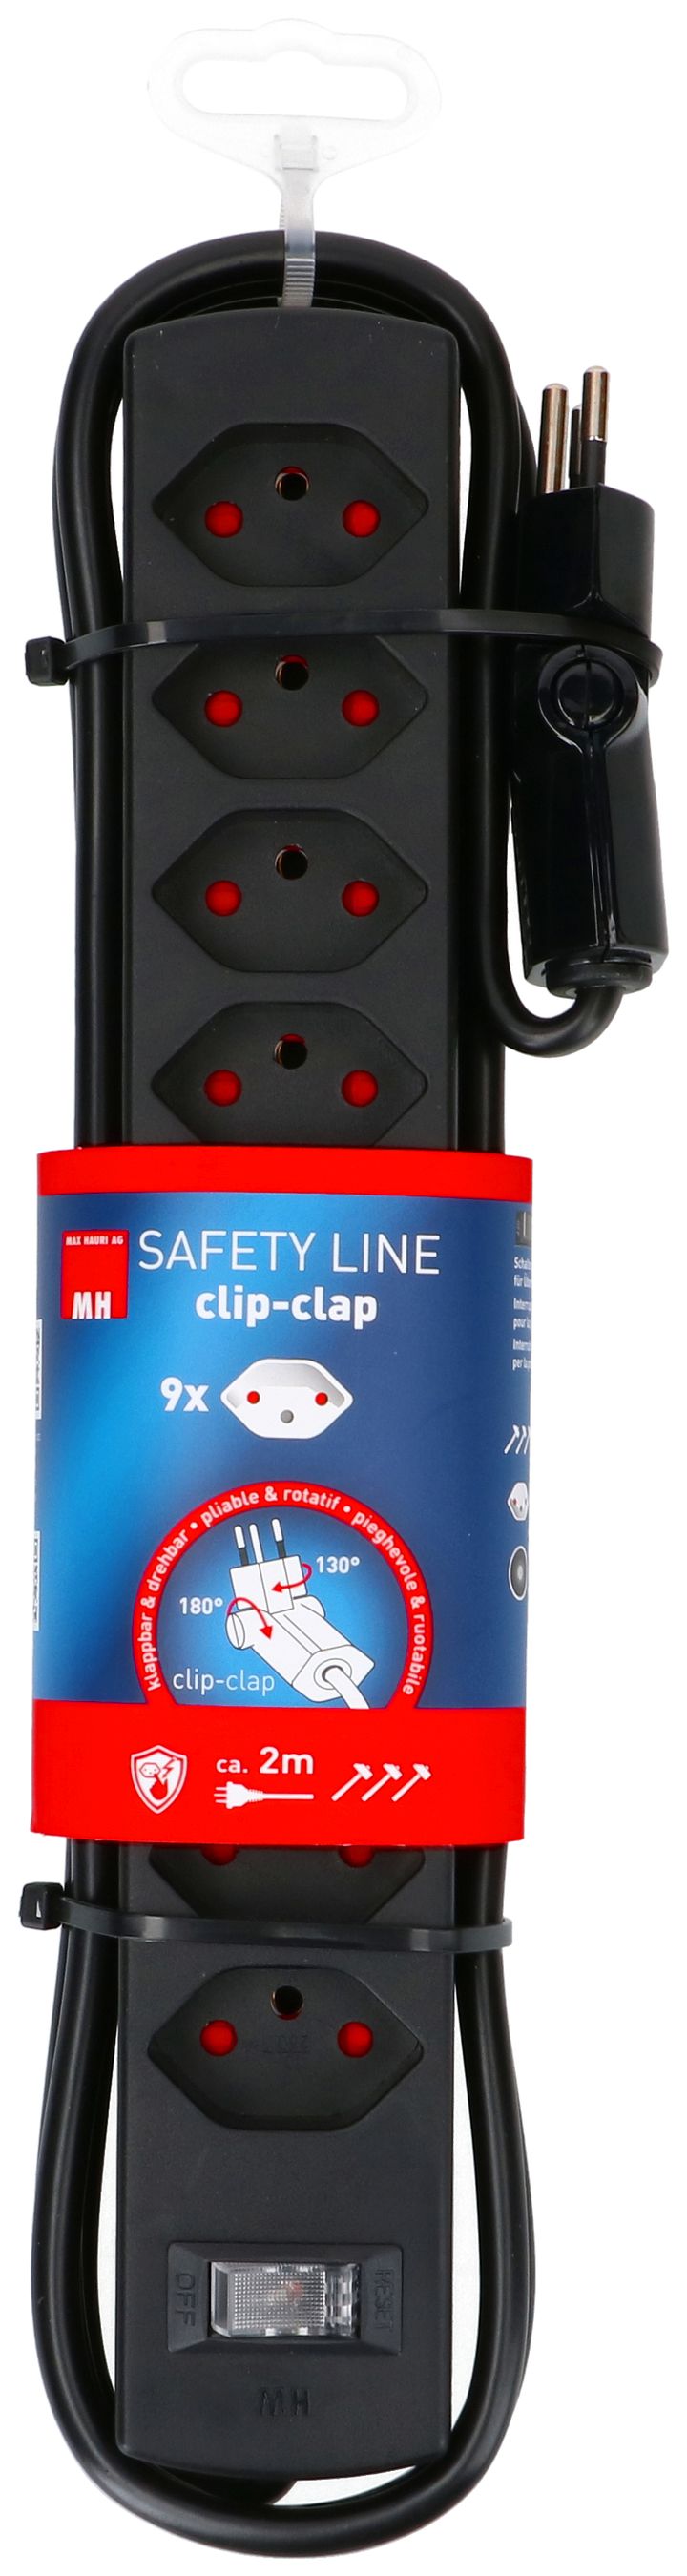 multiprise Safety Line 9x type 13 BS noir interrupteur 2m cli.